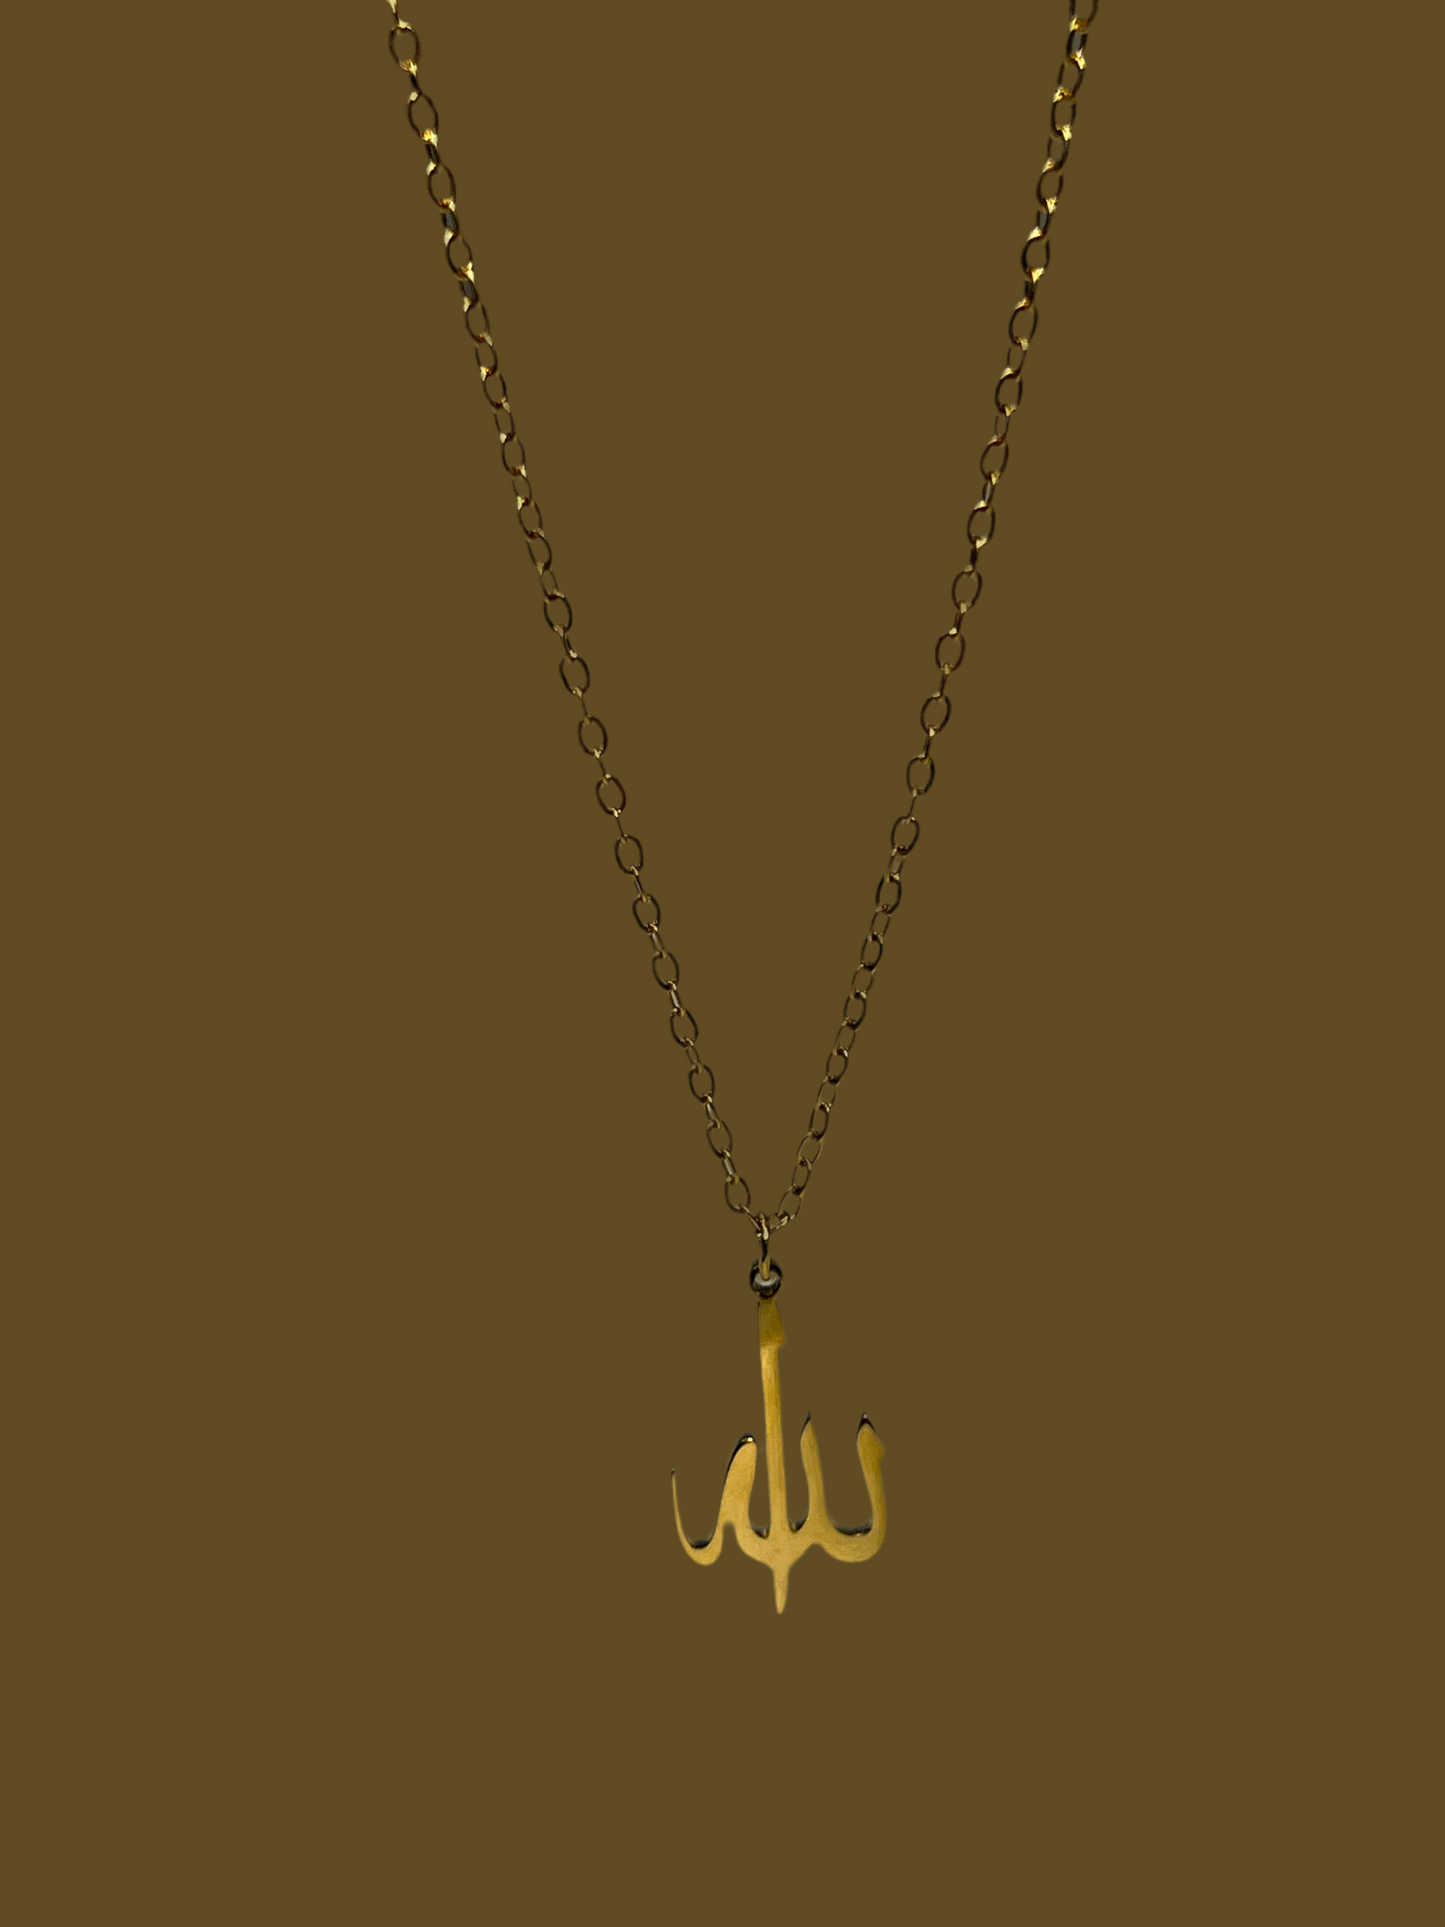 Allah|God necklace